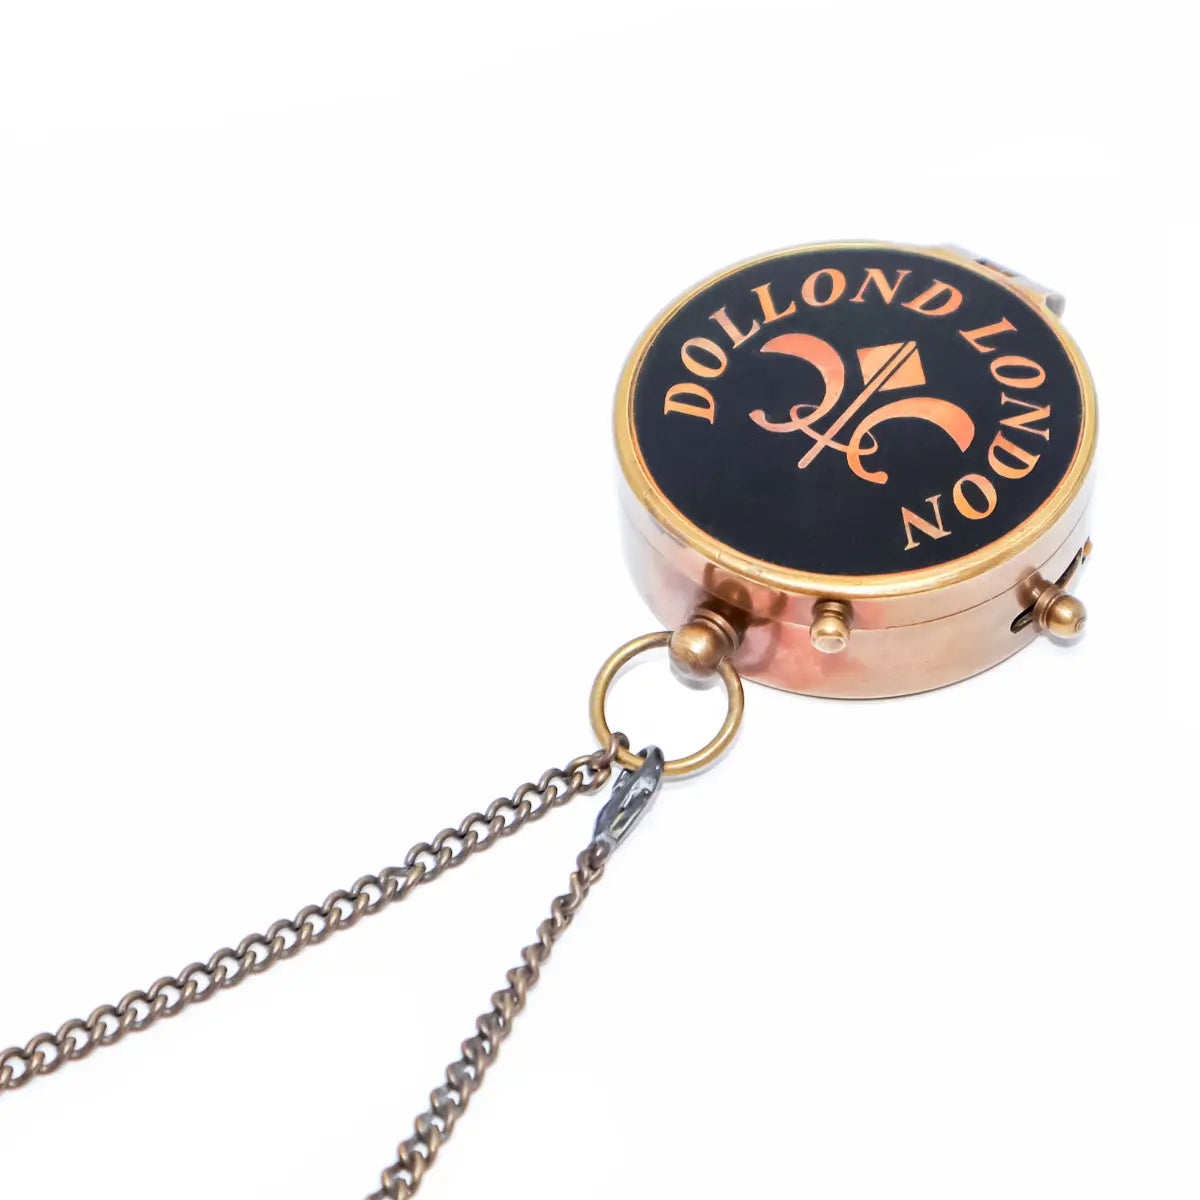 Dollond London Flat Brass Compass BC117